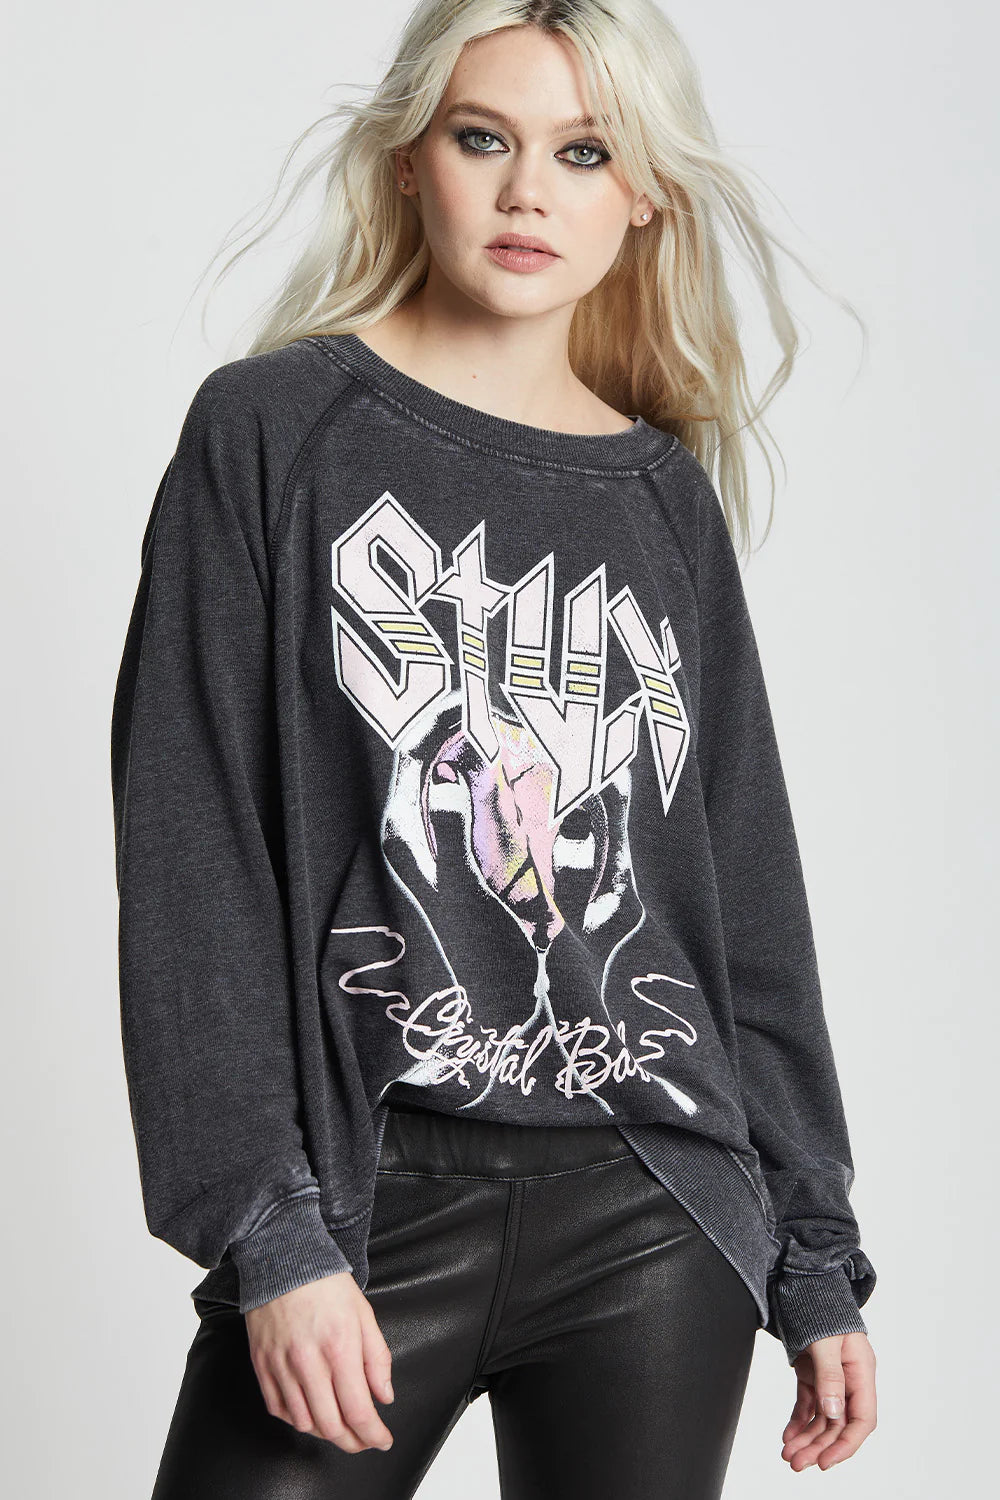 RK Styx Crystal Ball Sweatshirt